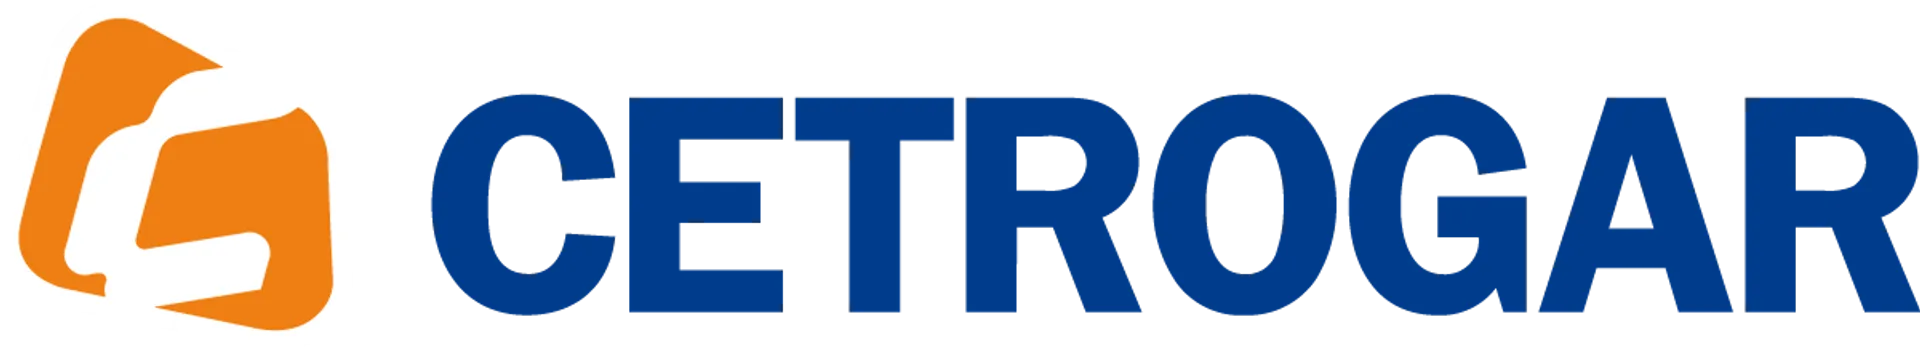 CETROGAR logo